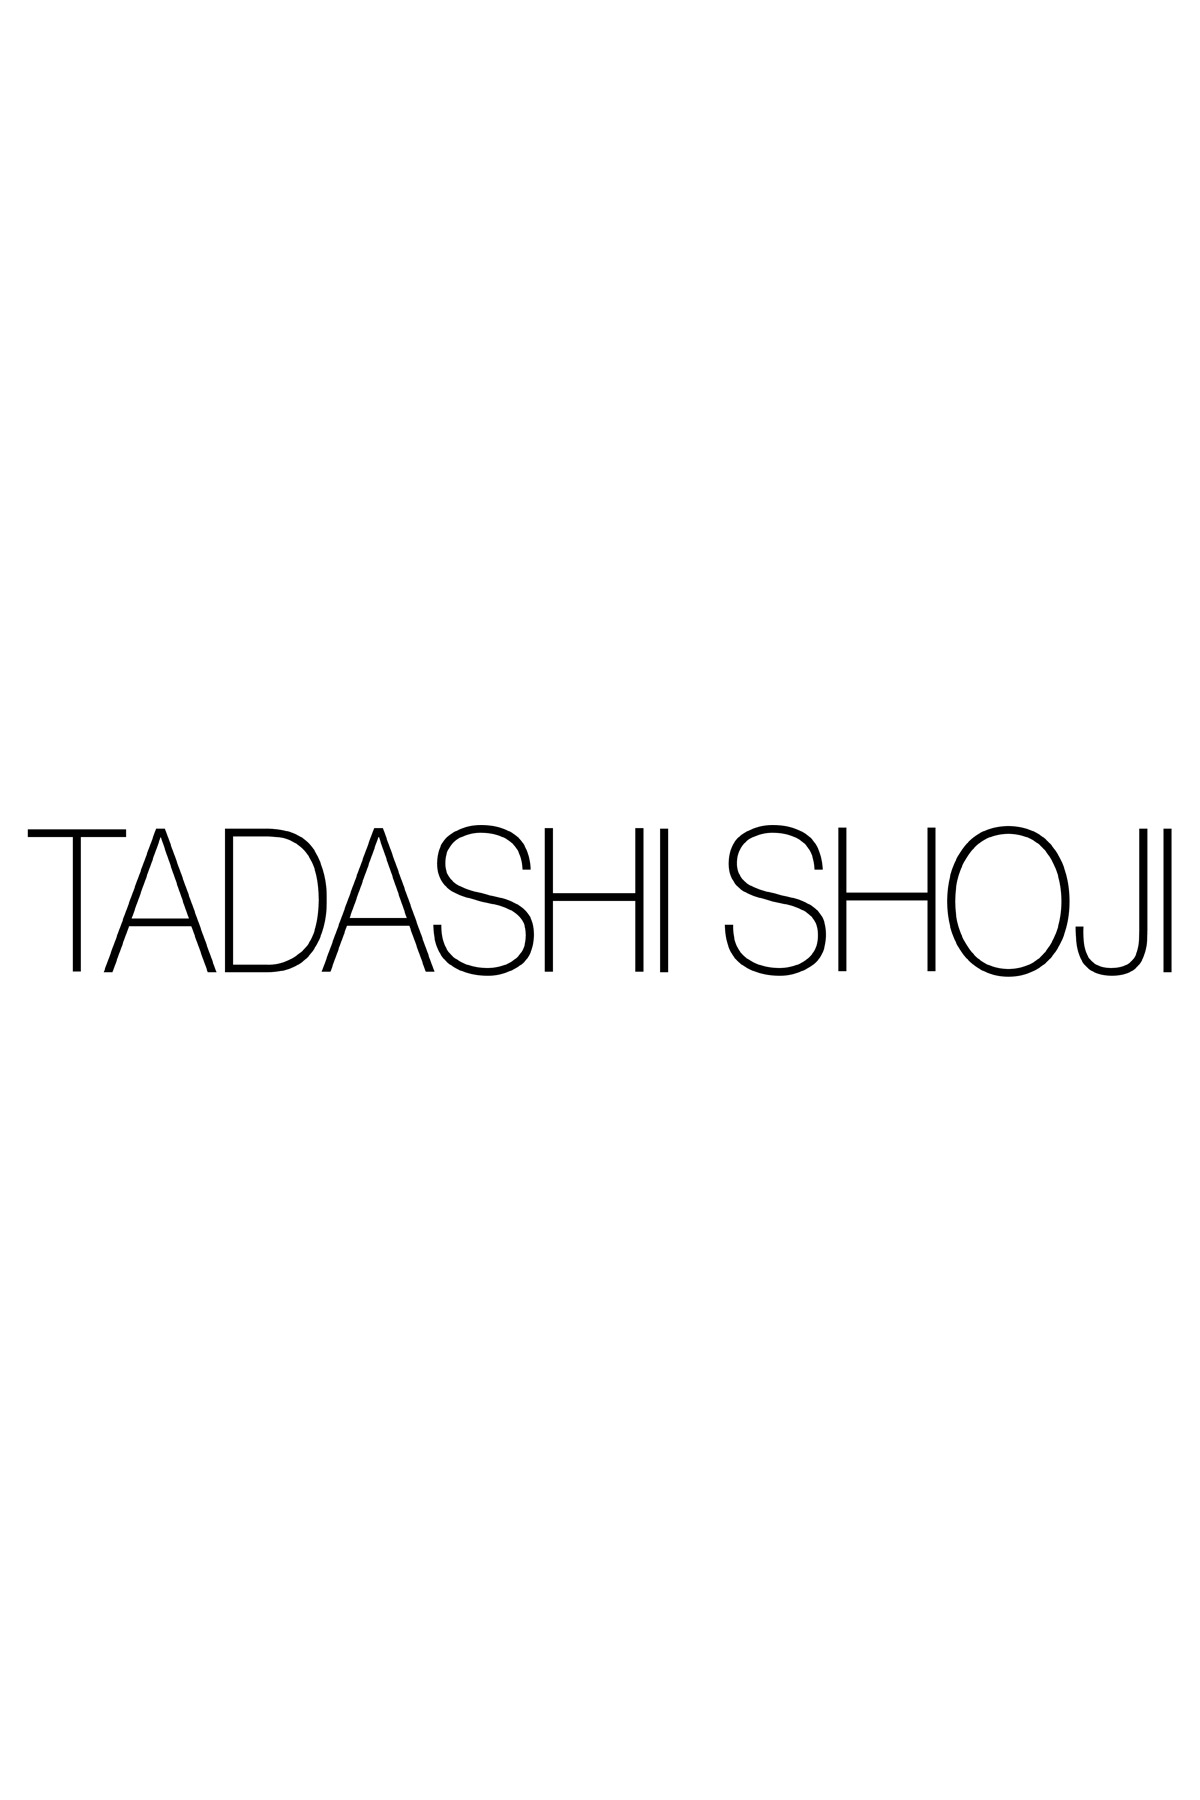 Tadashi Shoji | Find Your Body Type